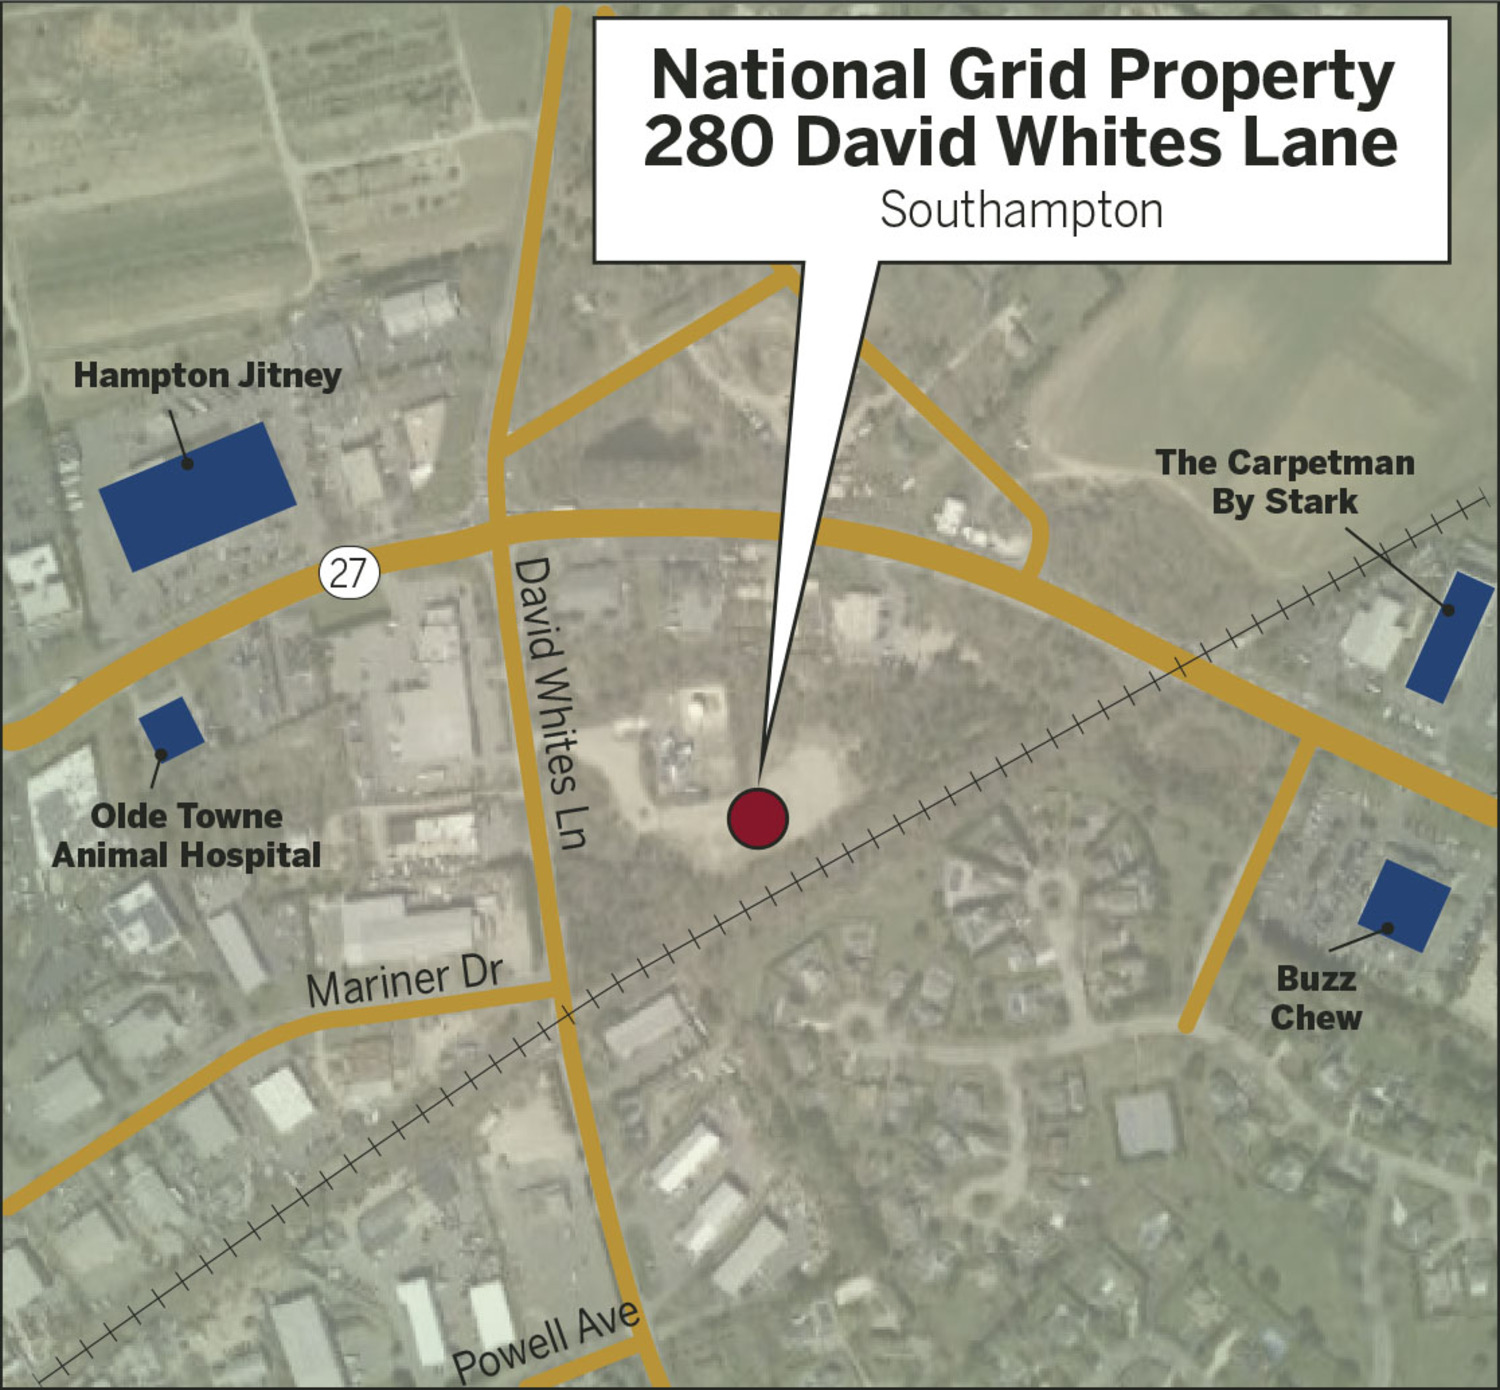 The National Grid property at 280 David Whites Lane.